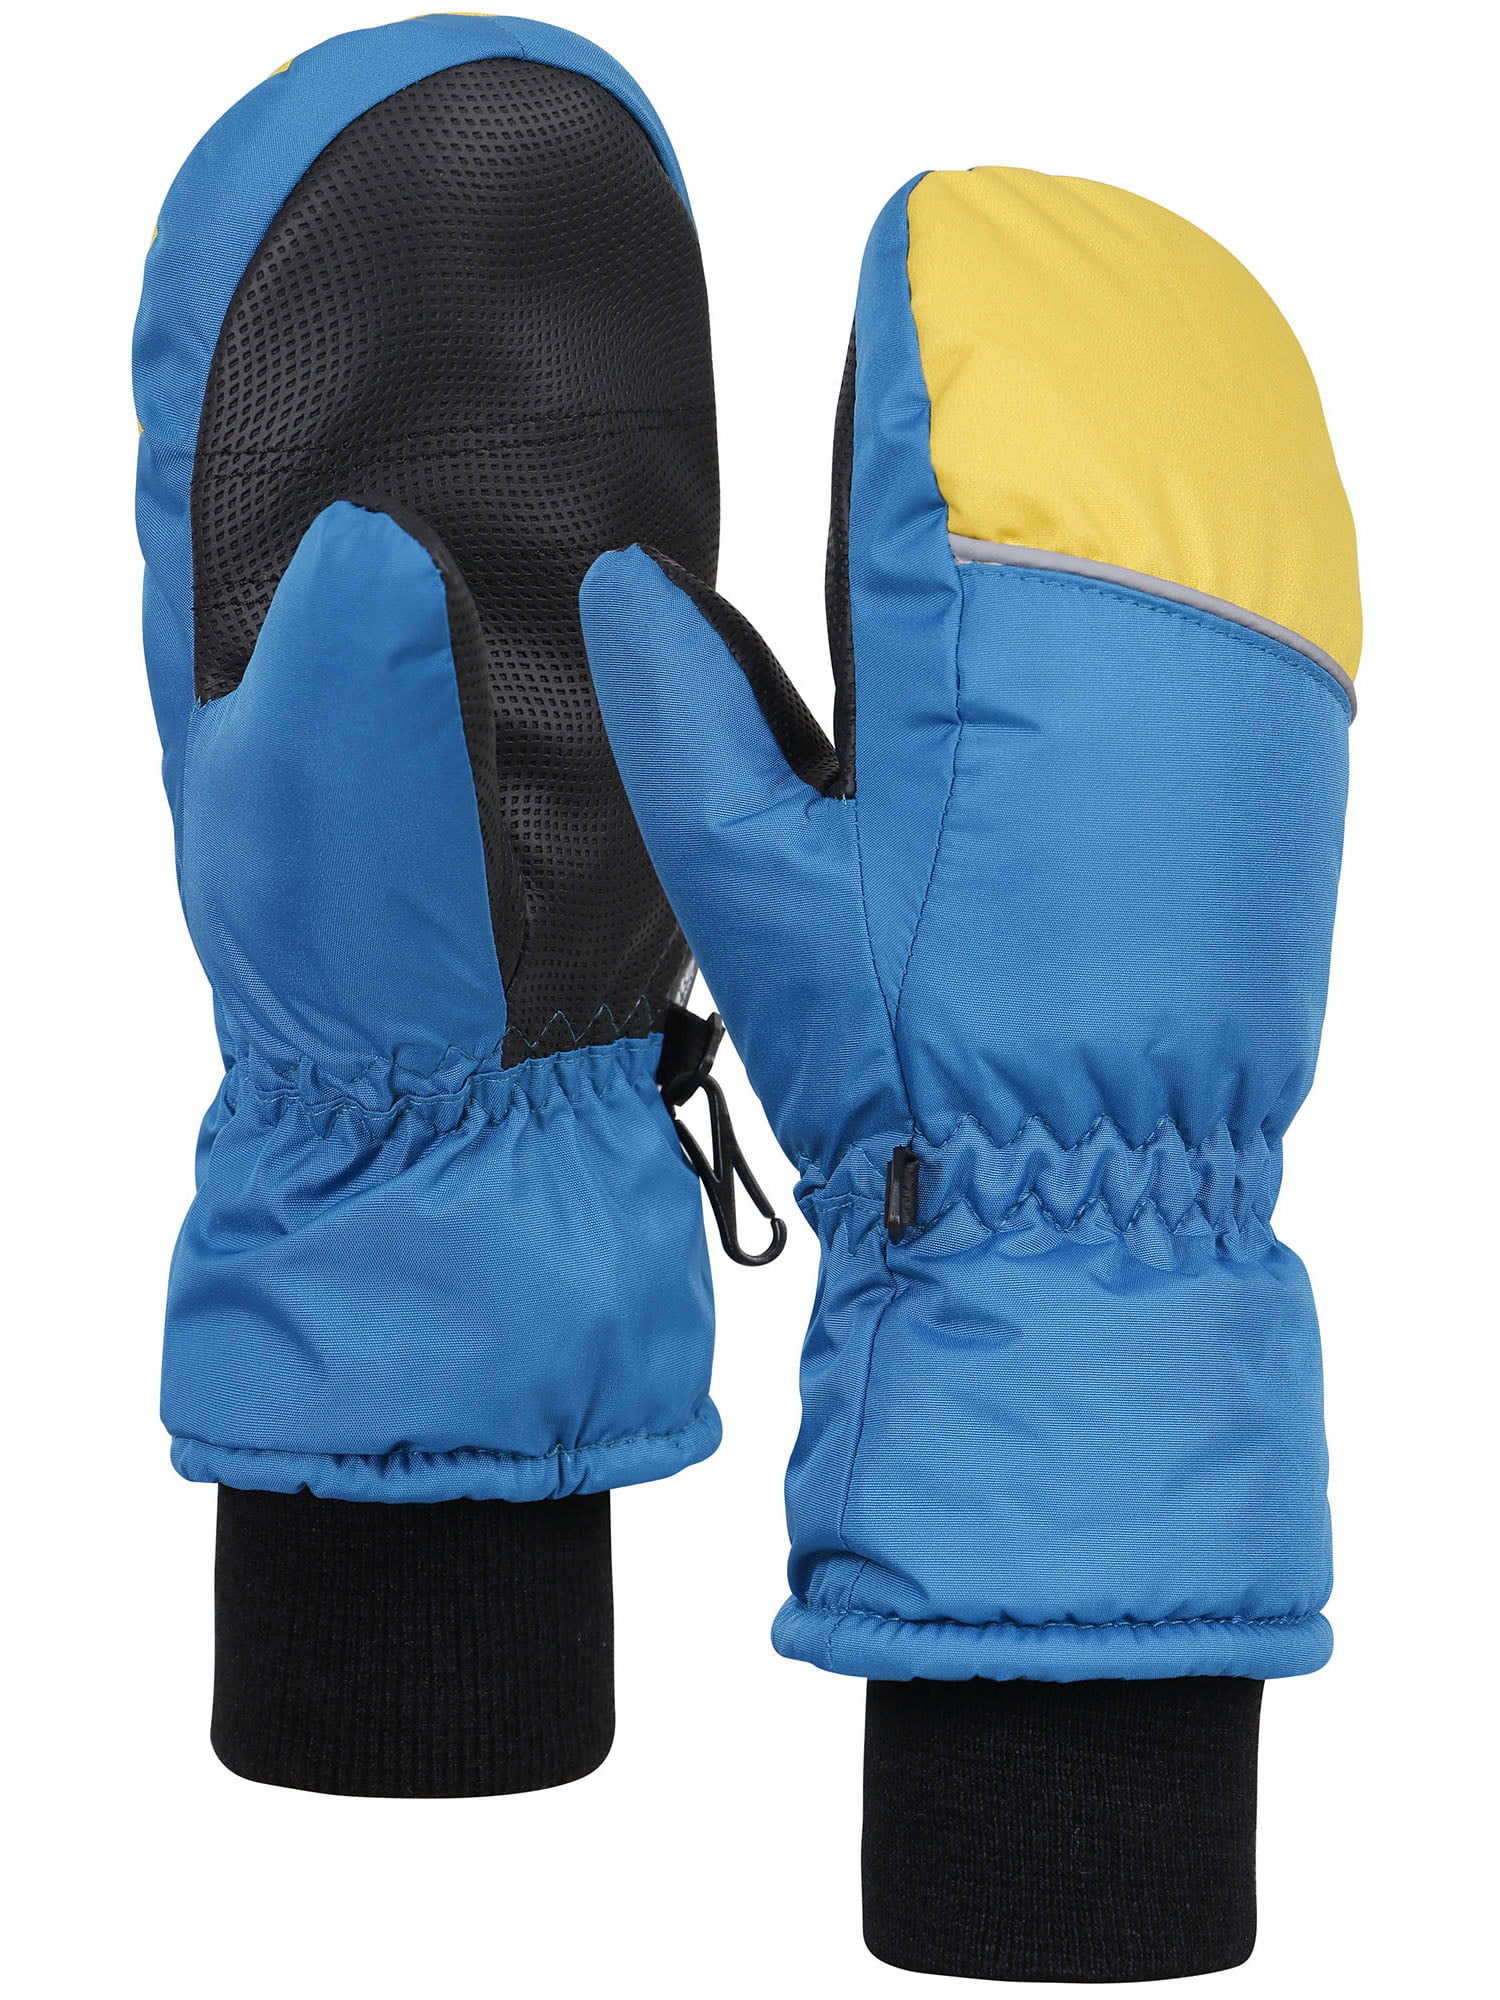 Andorra Kids Thinsulate Lined Ski Mittens Boys Girls Snow Mittens Winter Gloves